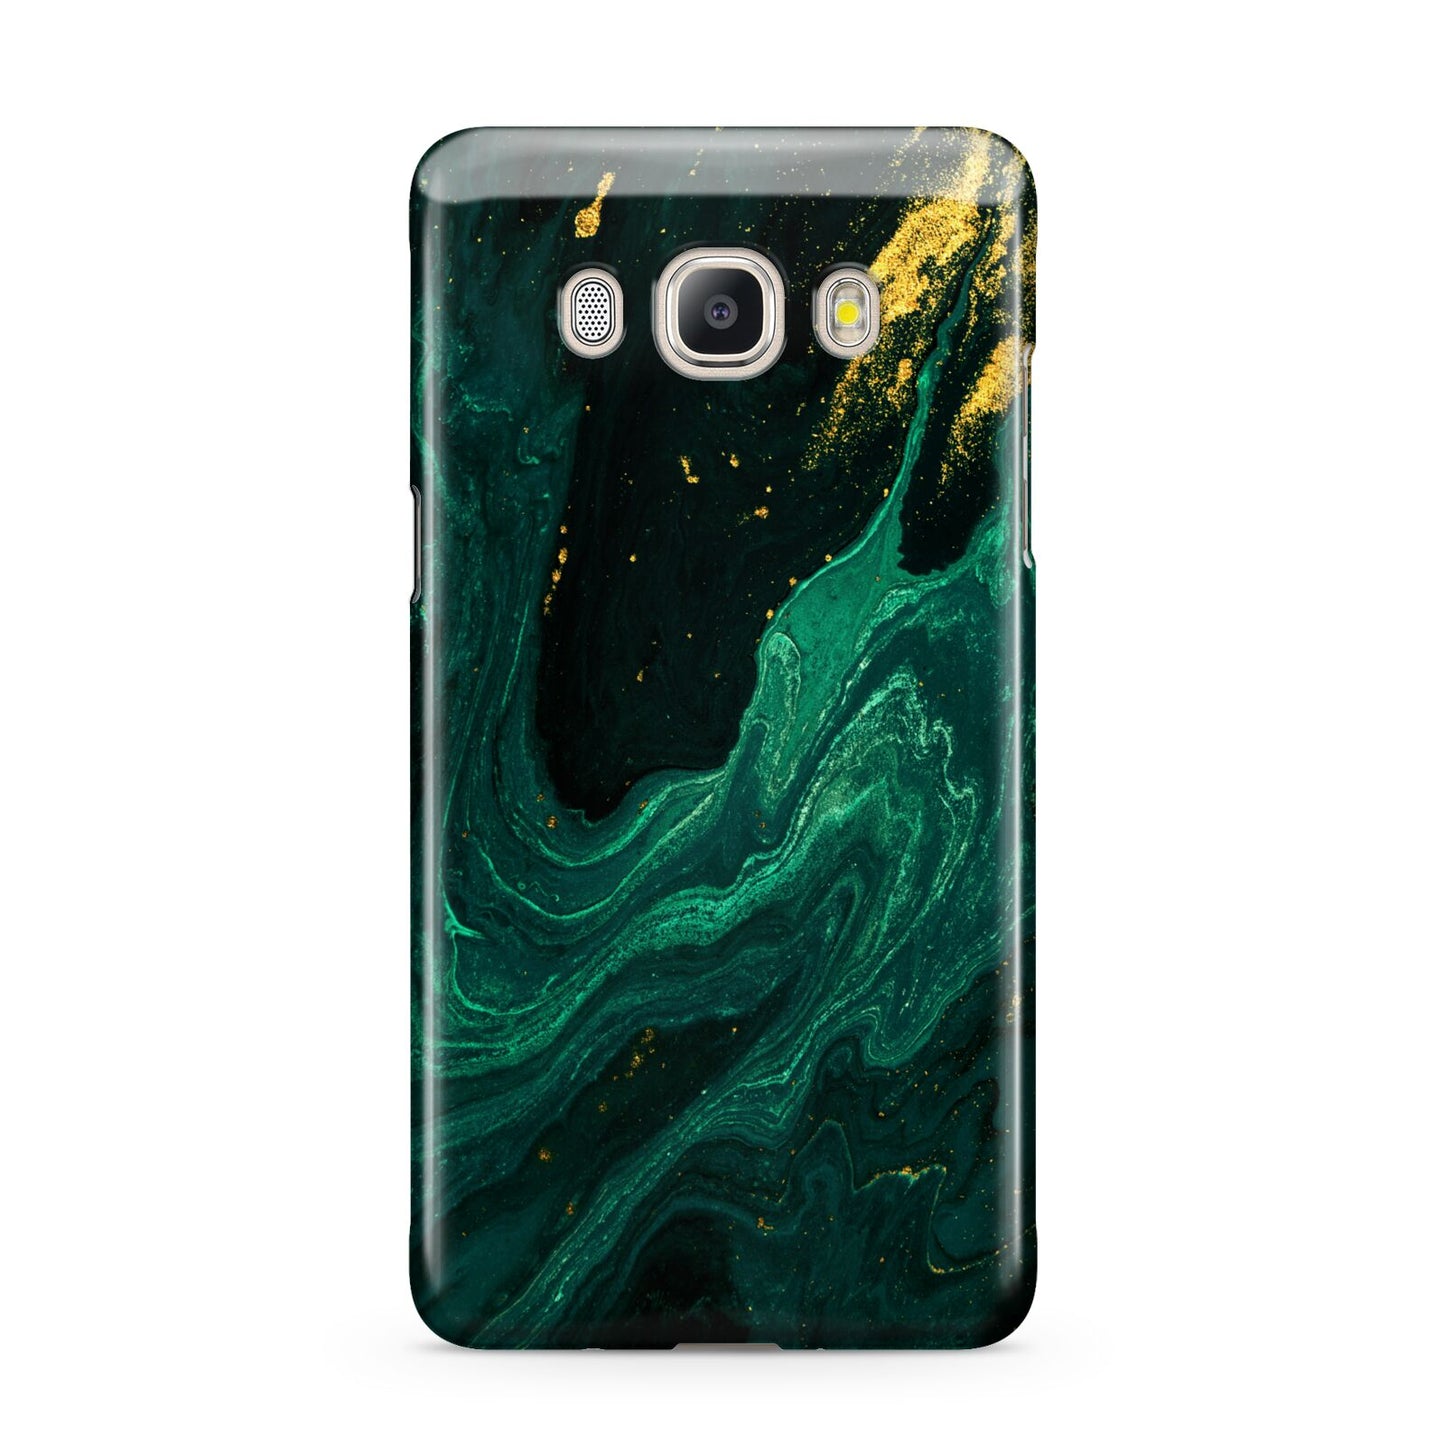 Emerald Green Samsung Galaxy J5 2016 Case